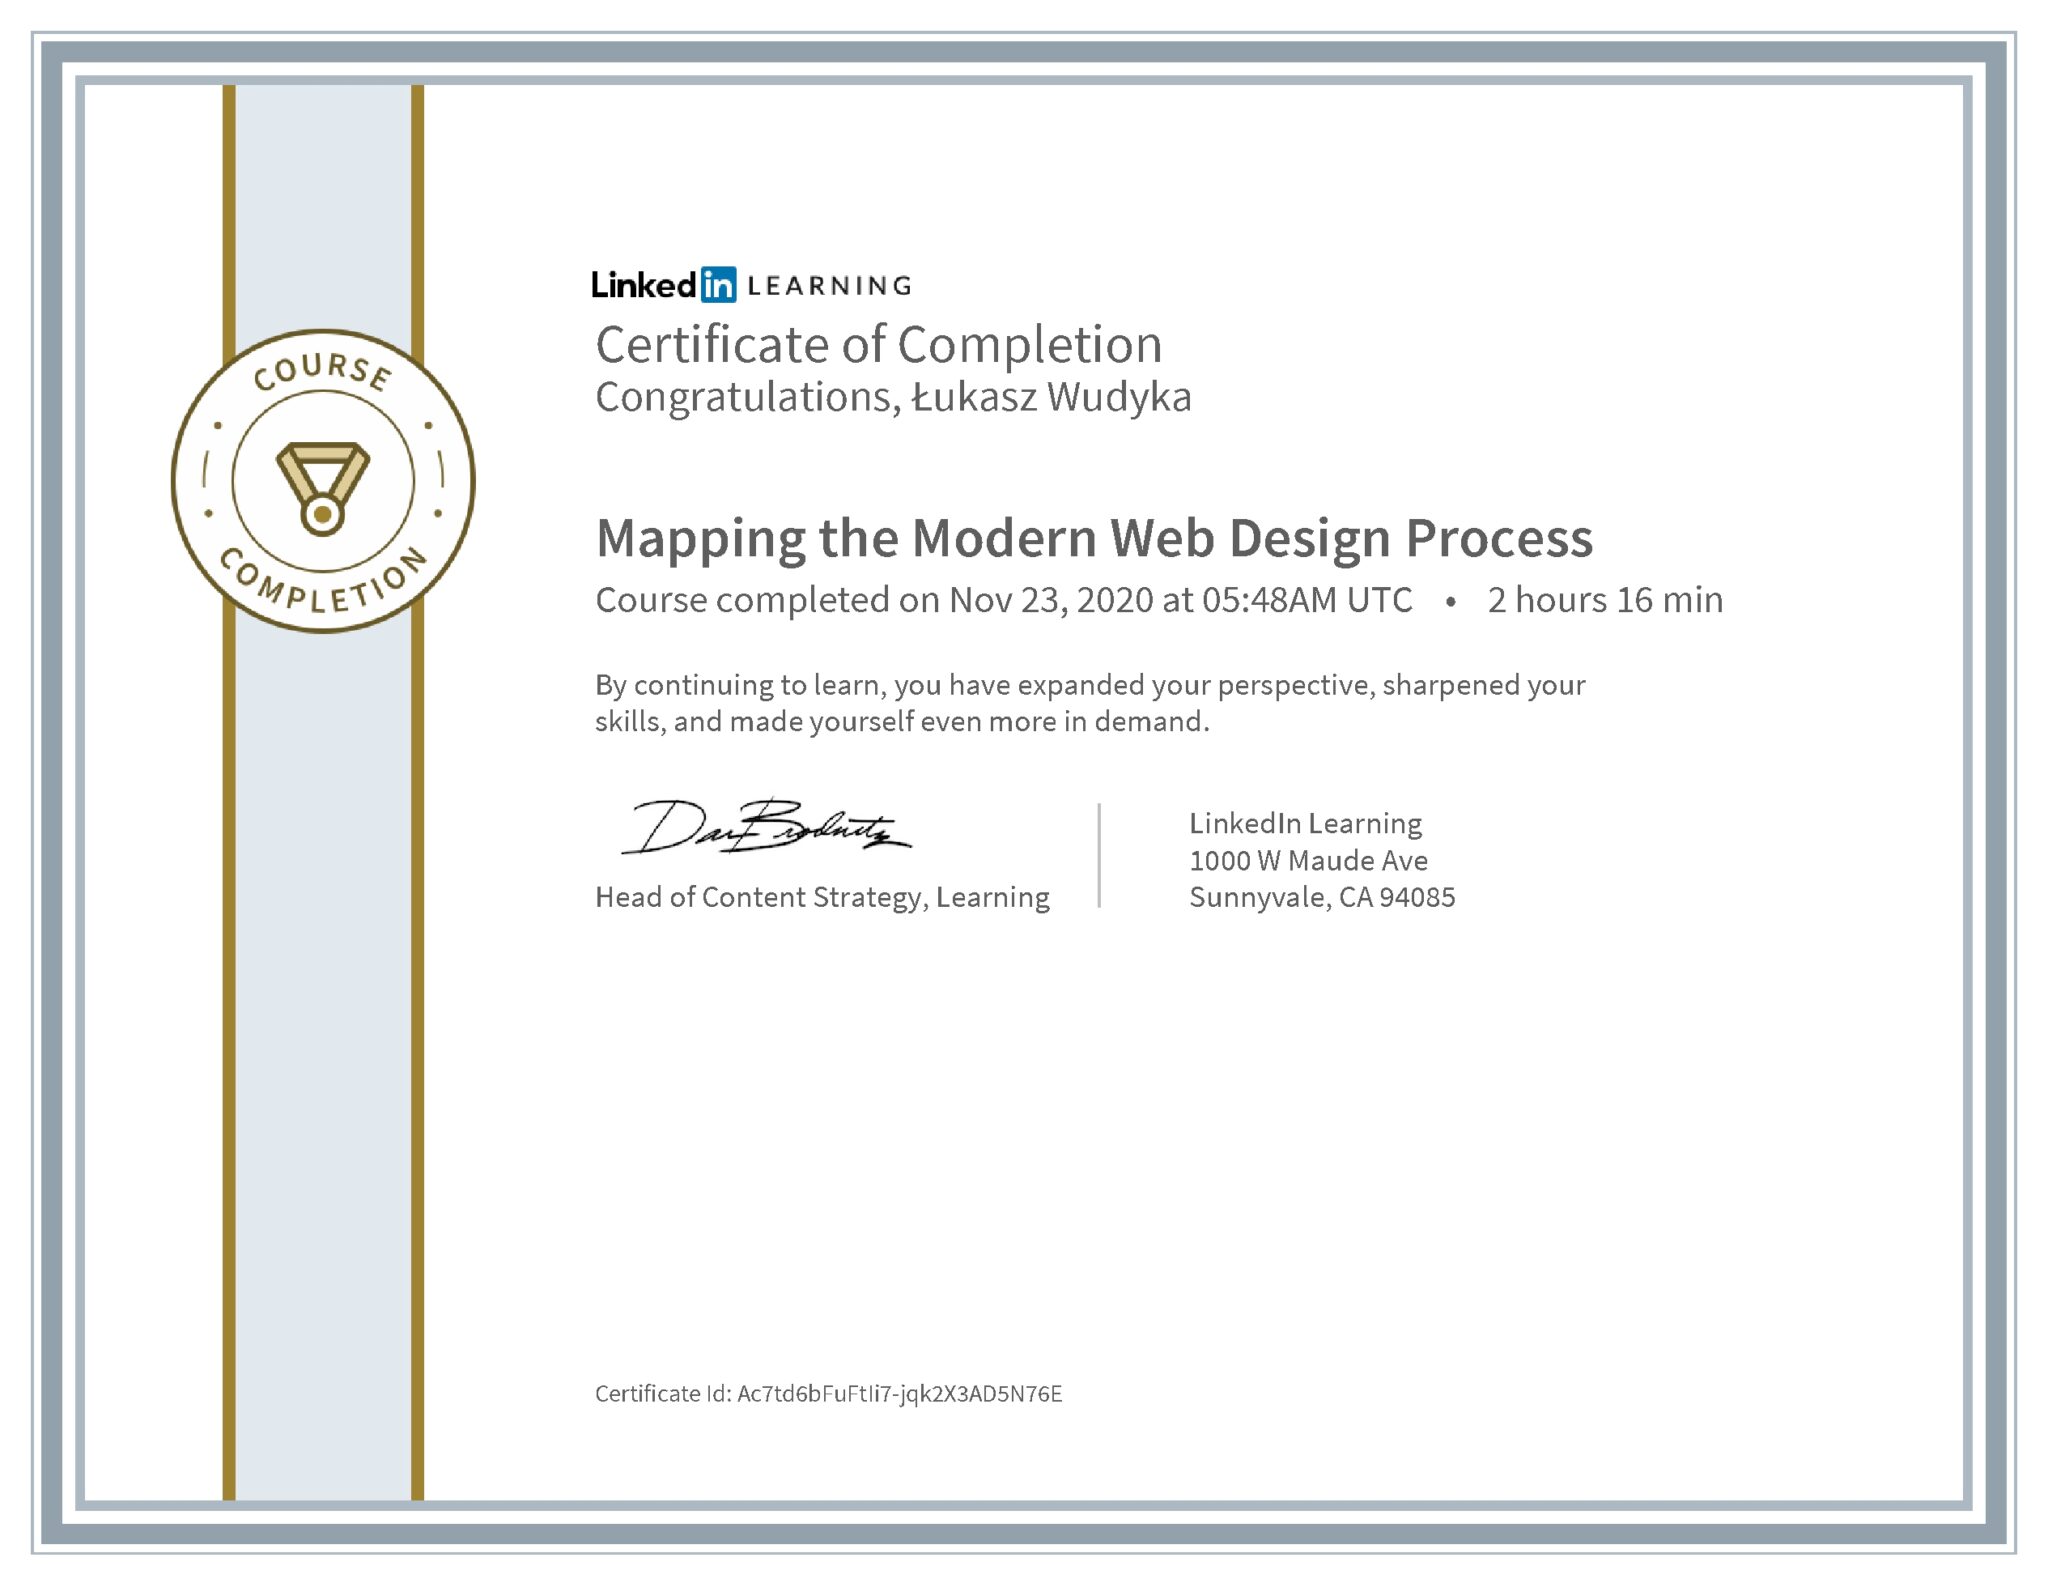 Łukasz Wudyka certyfikat LinkedIn Mapping the Modern Web Design Process